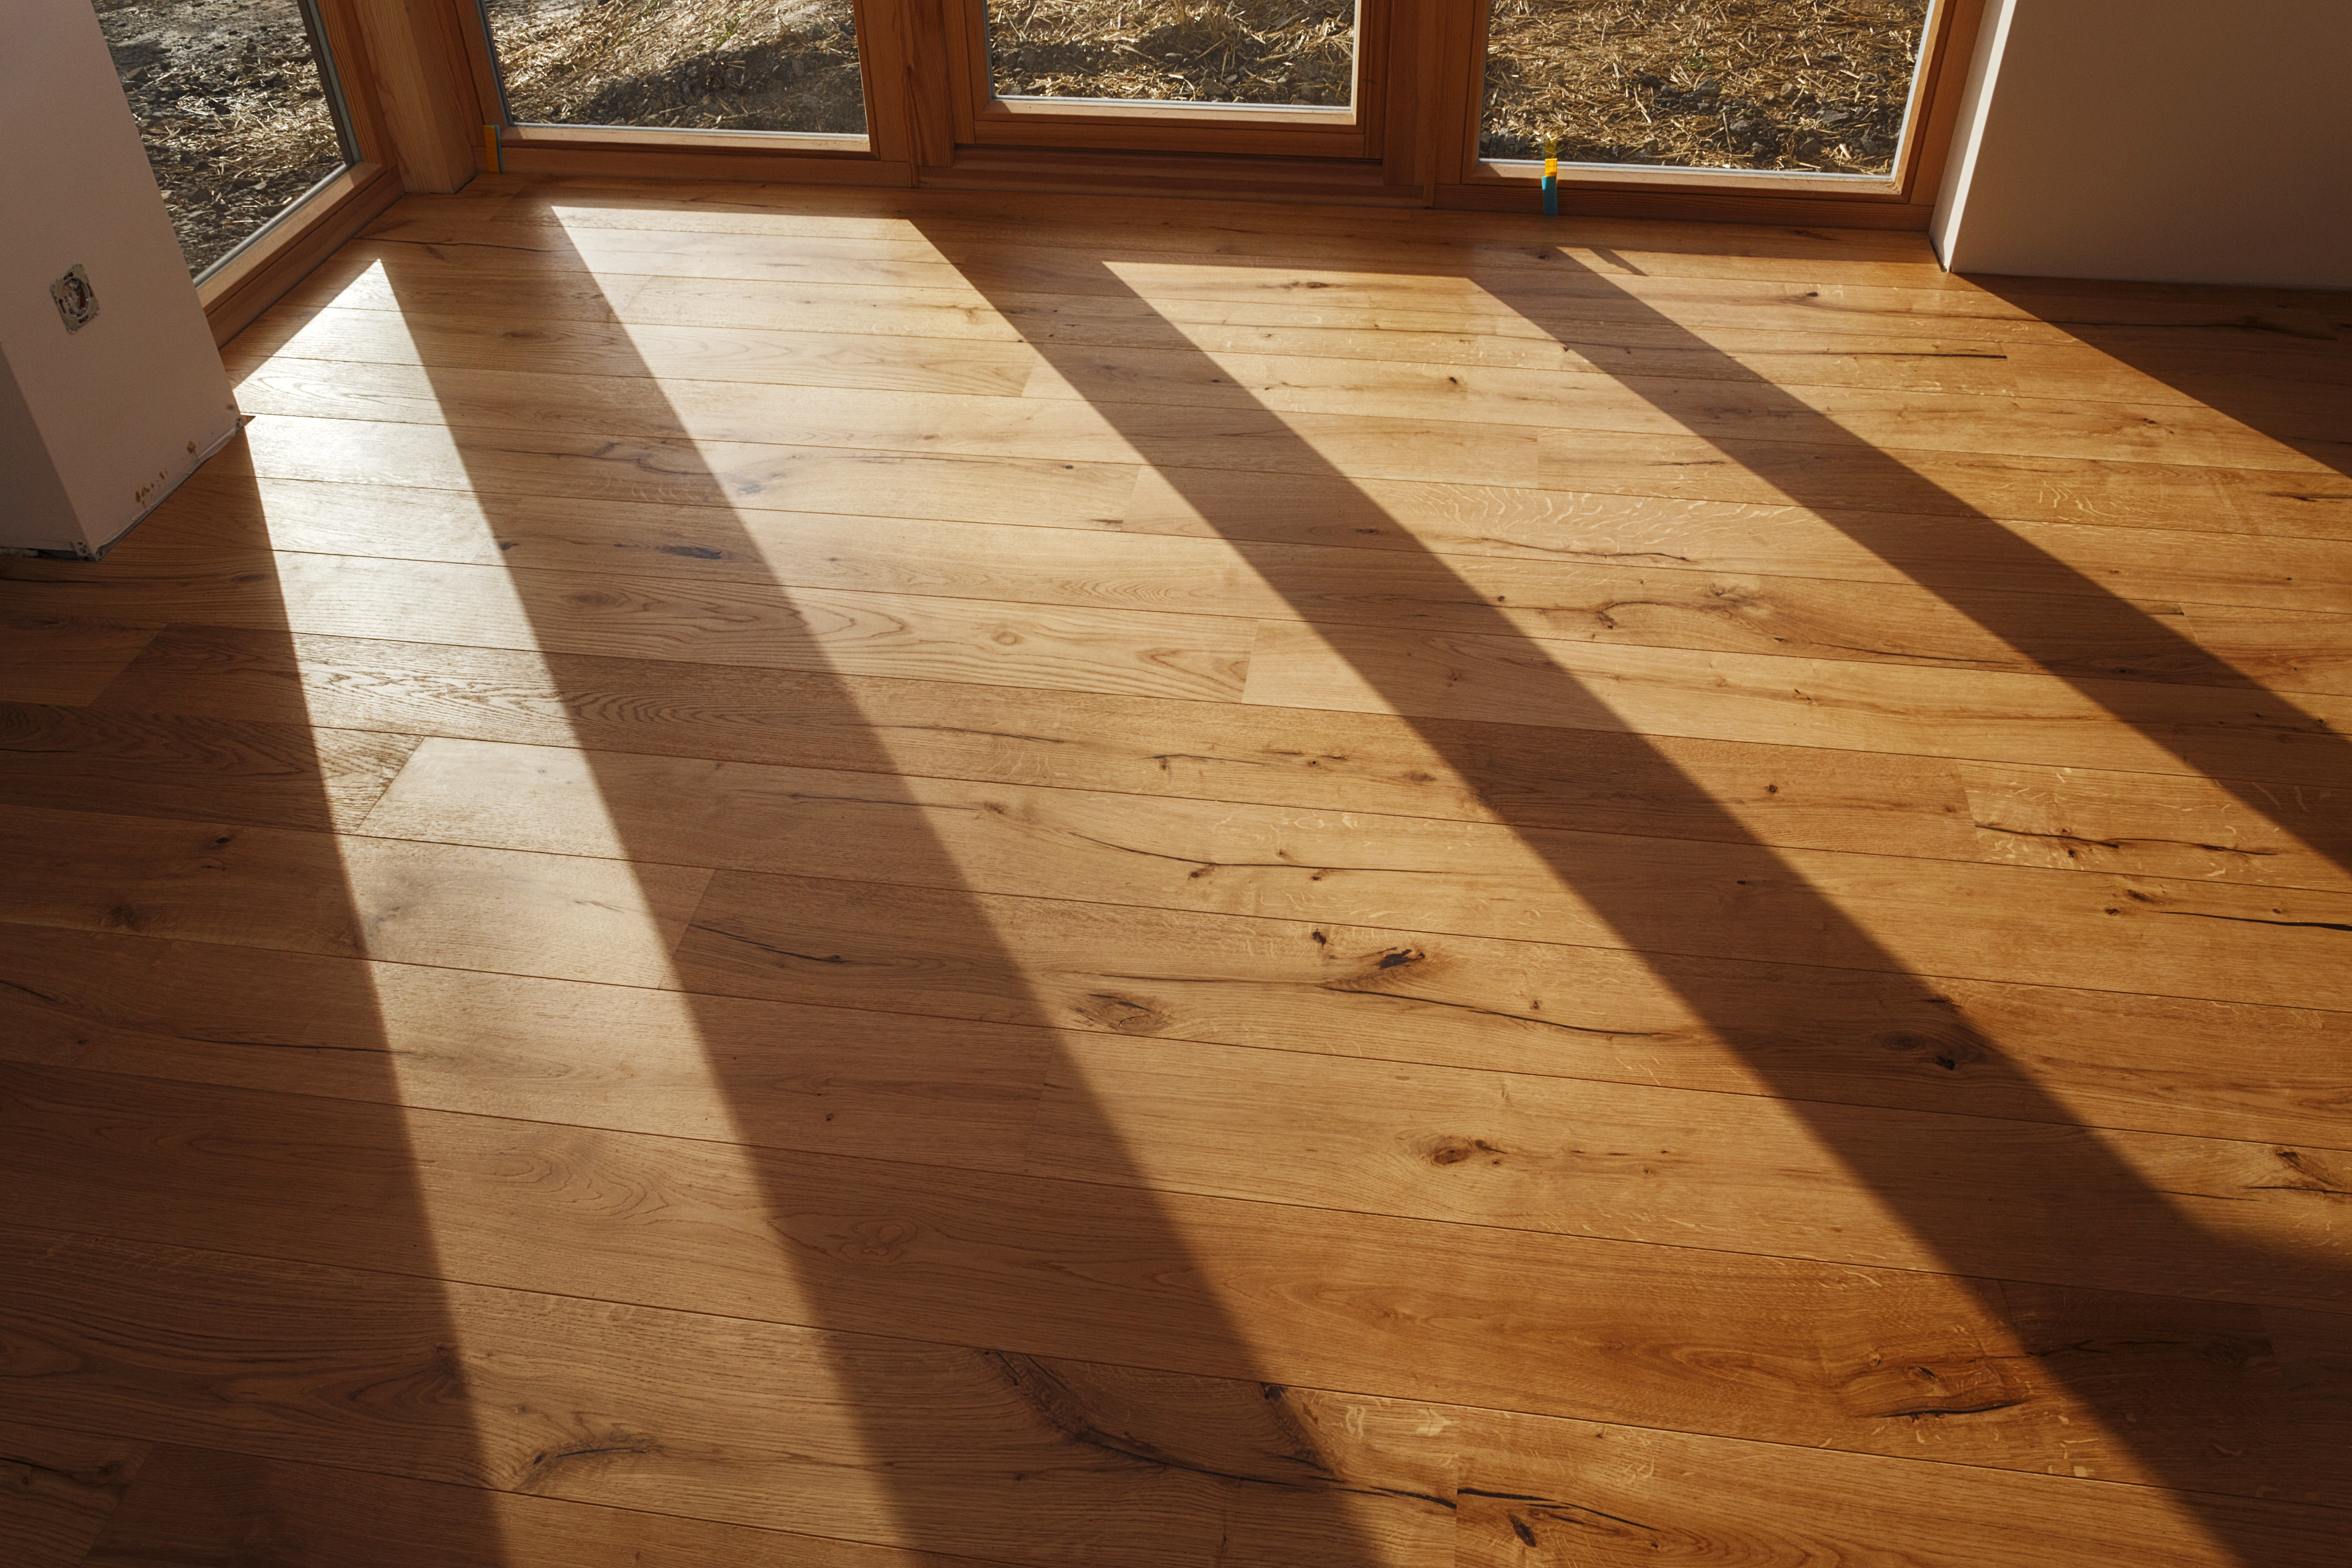 Wood Flooring Hardwood Versus, Cost Of Wood Flooring Vs Laminate